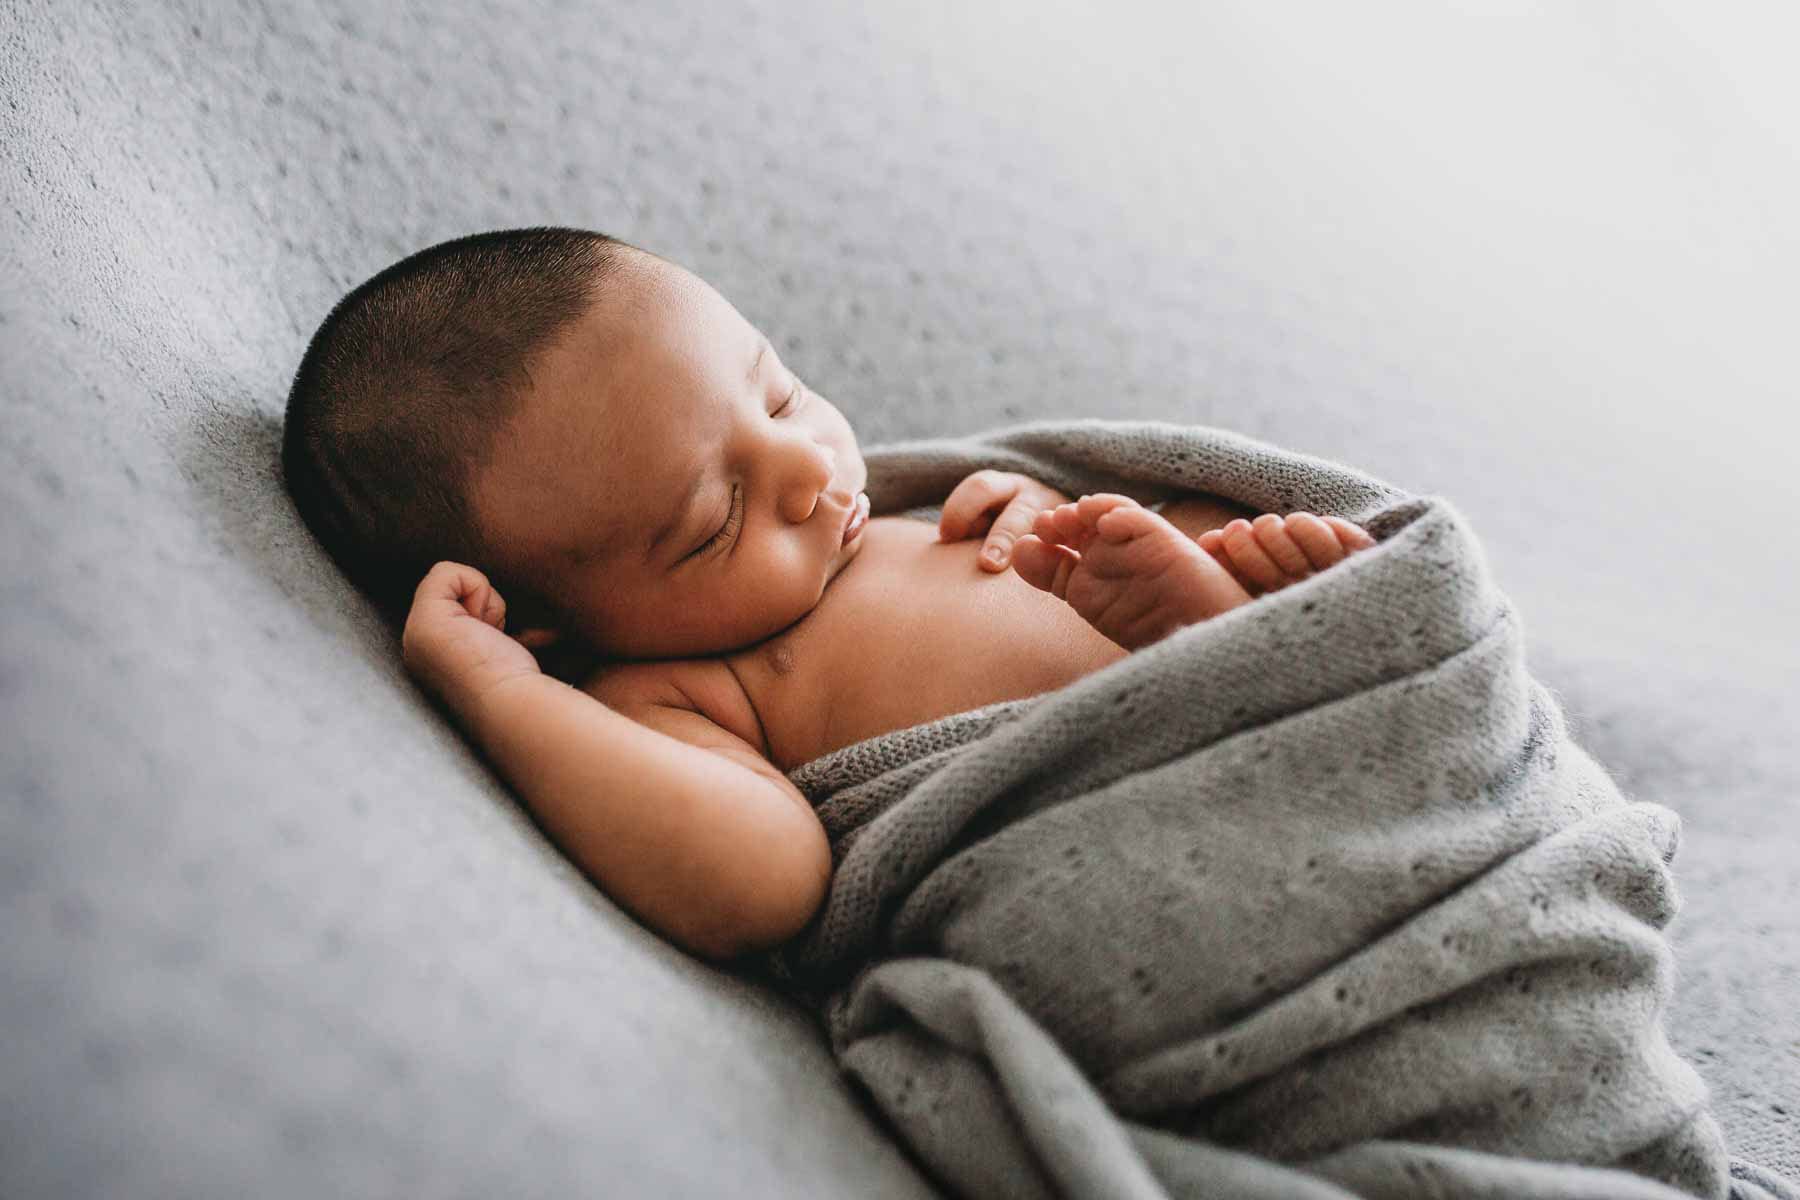 A newborn baby boy posed sleeping wrapped on a grey backdrop